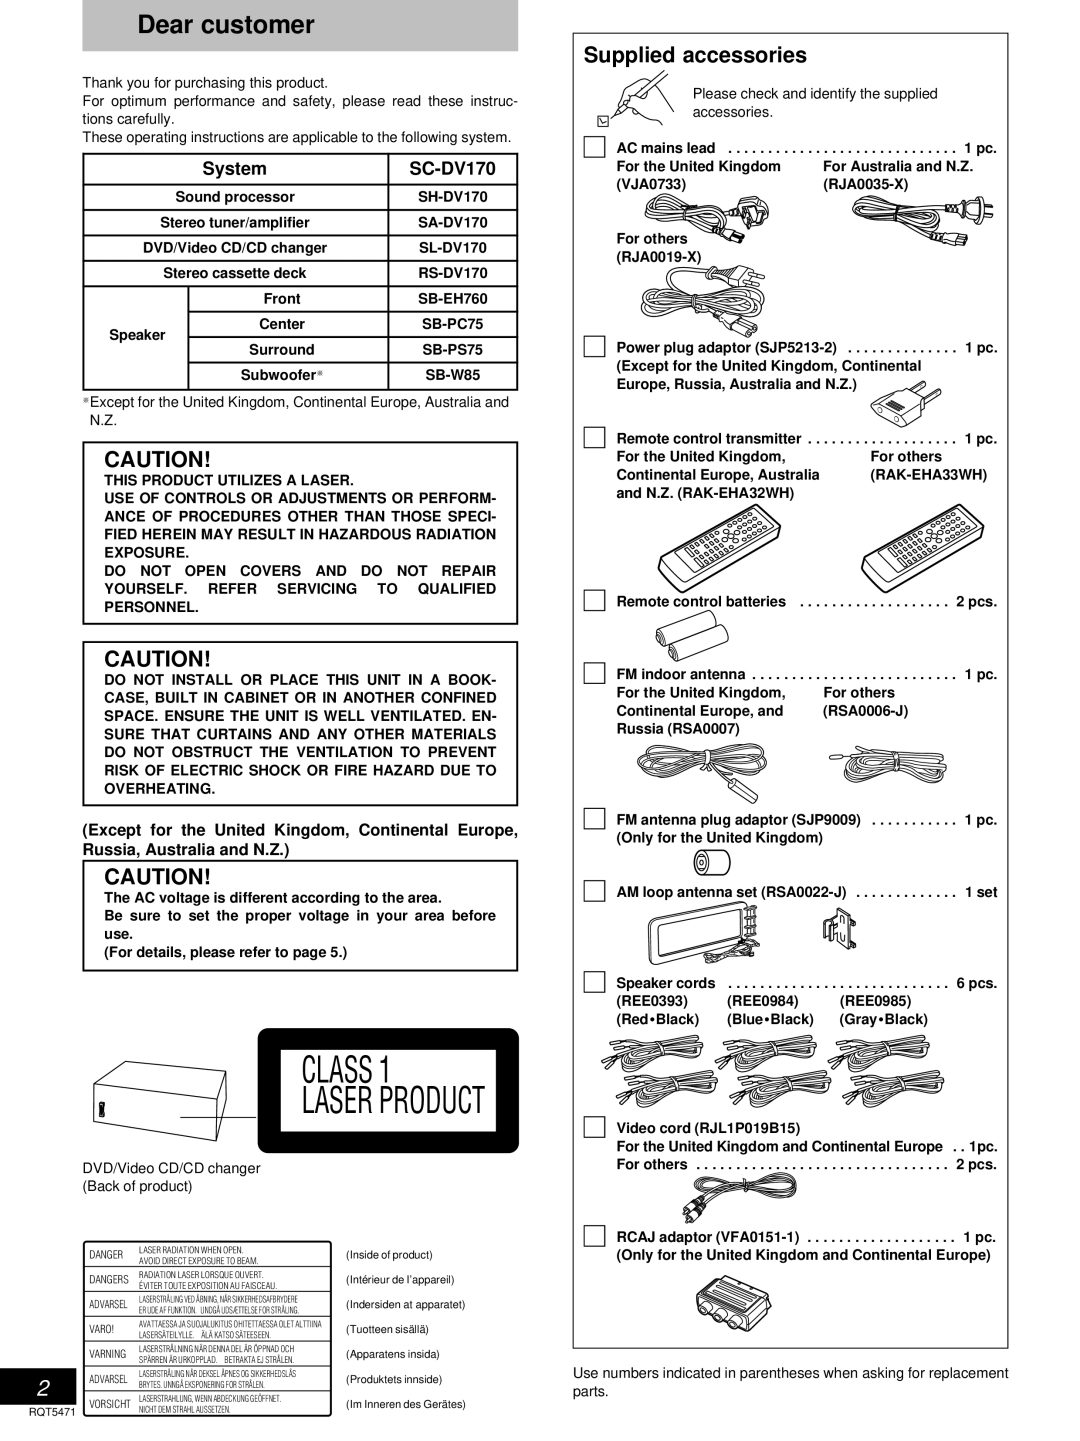 Technics SC-DV170 manual Dear customer, Supplied accessories, System 